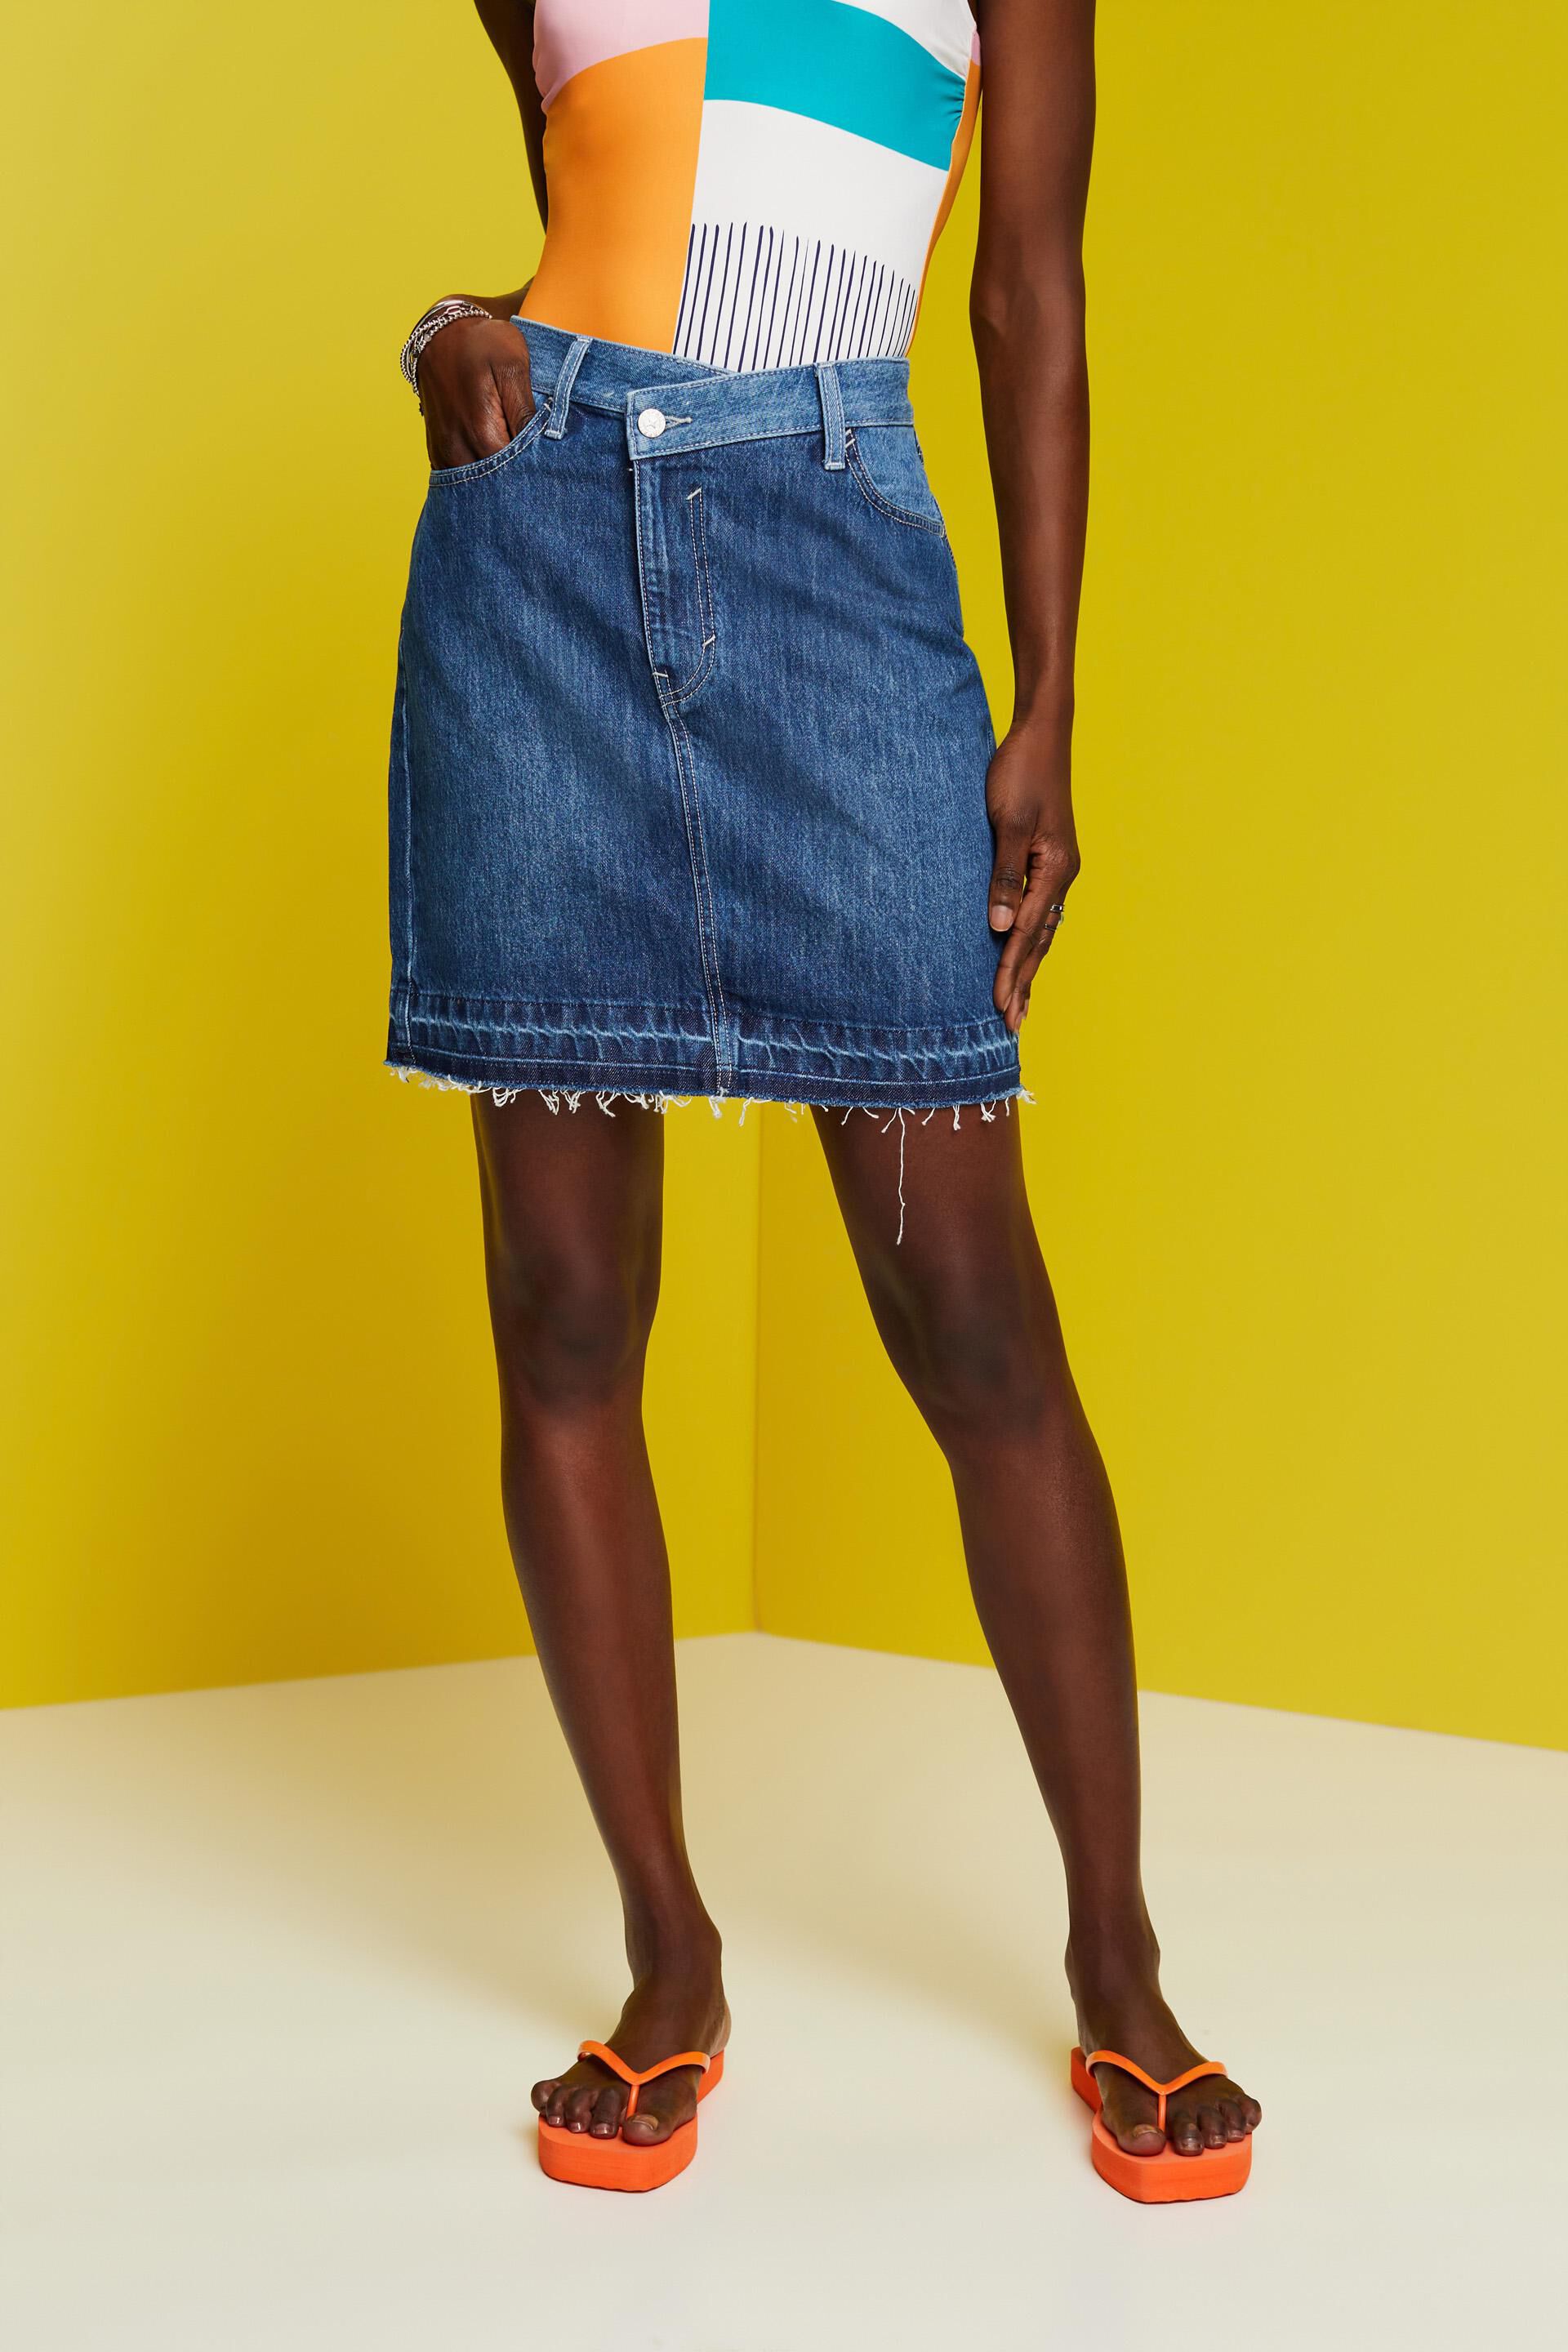 Esprit skirt asymmetric Jeans hem with an mini